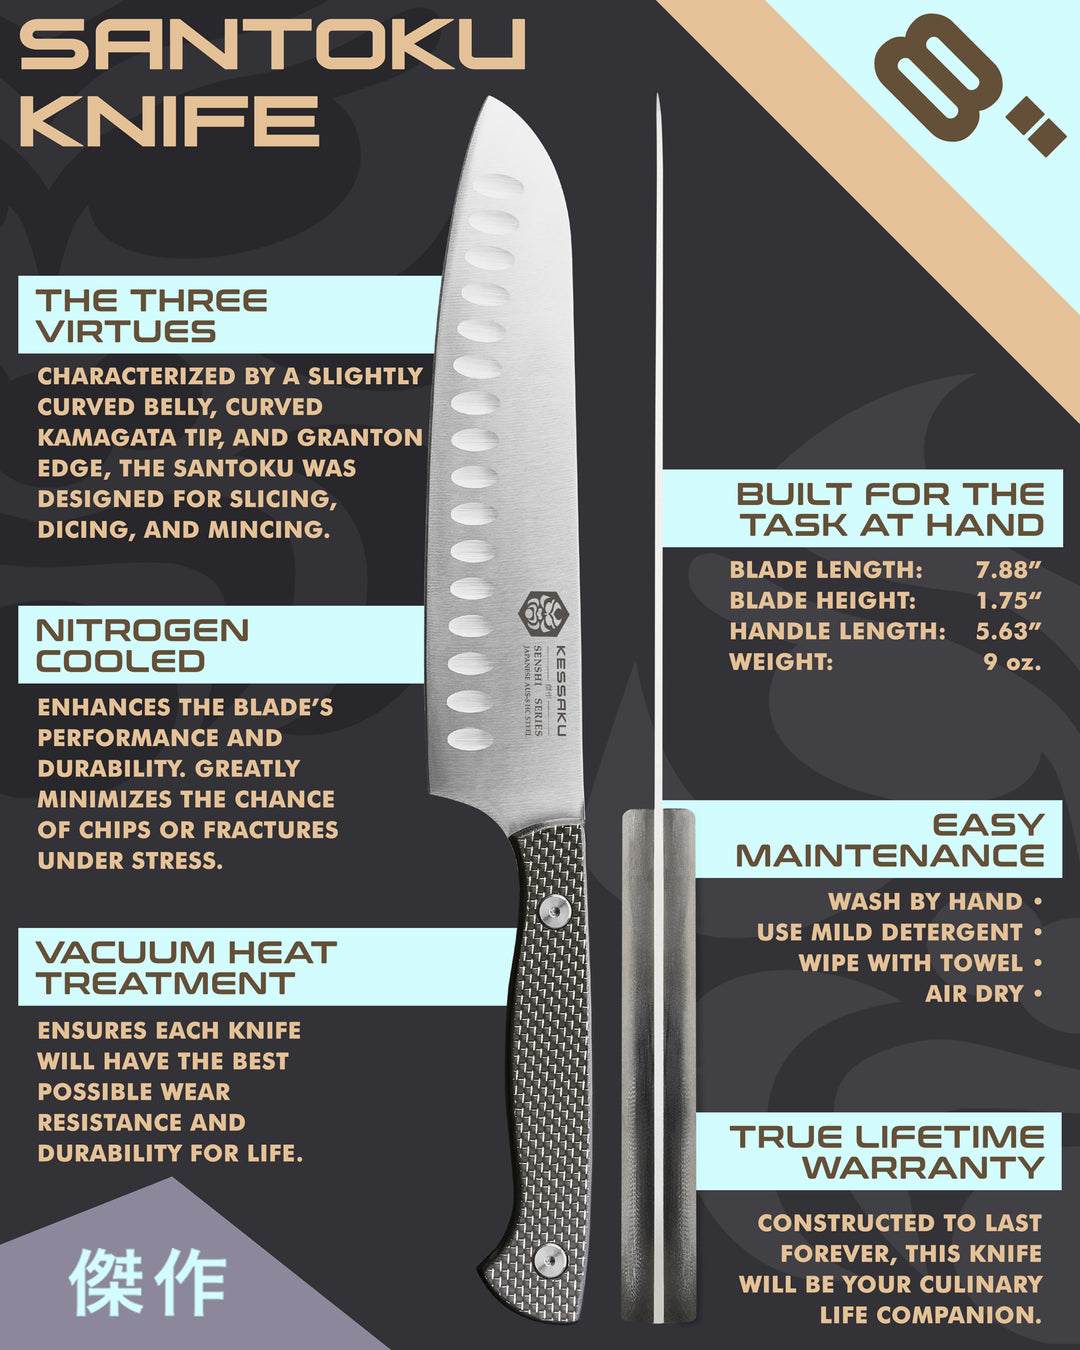 Kessaku Senshi Santoku Knife uses, dimensions, maintenance, warranty info, and additional blade treatments